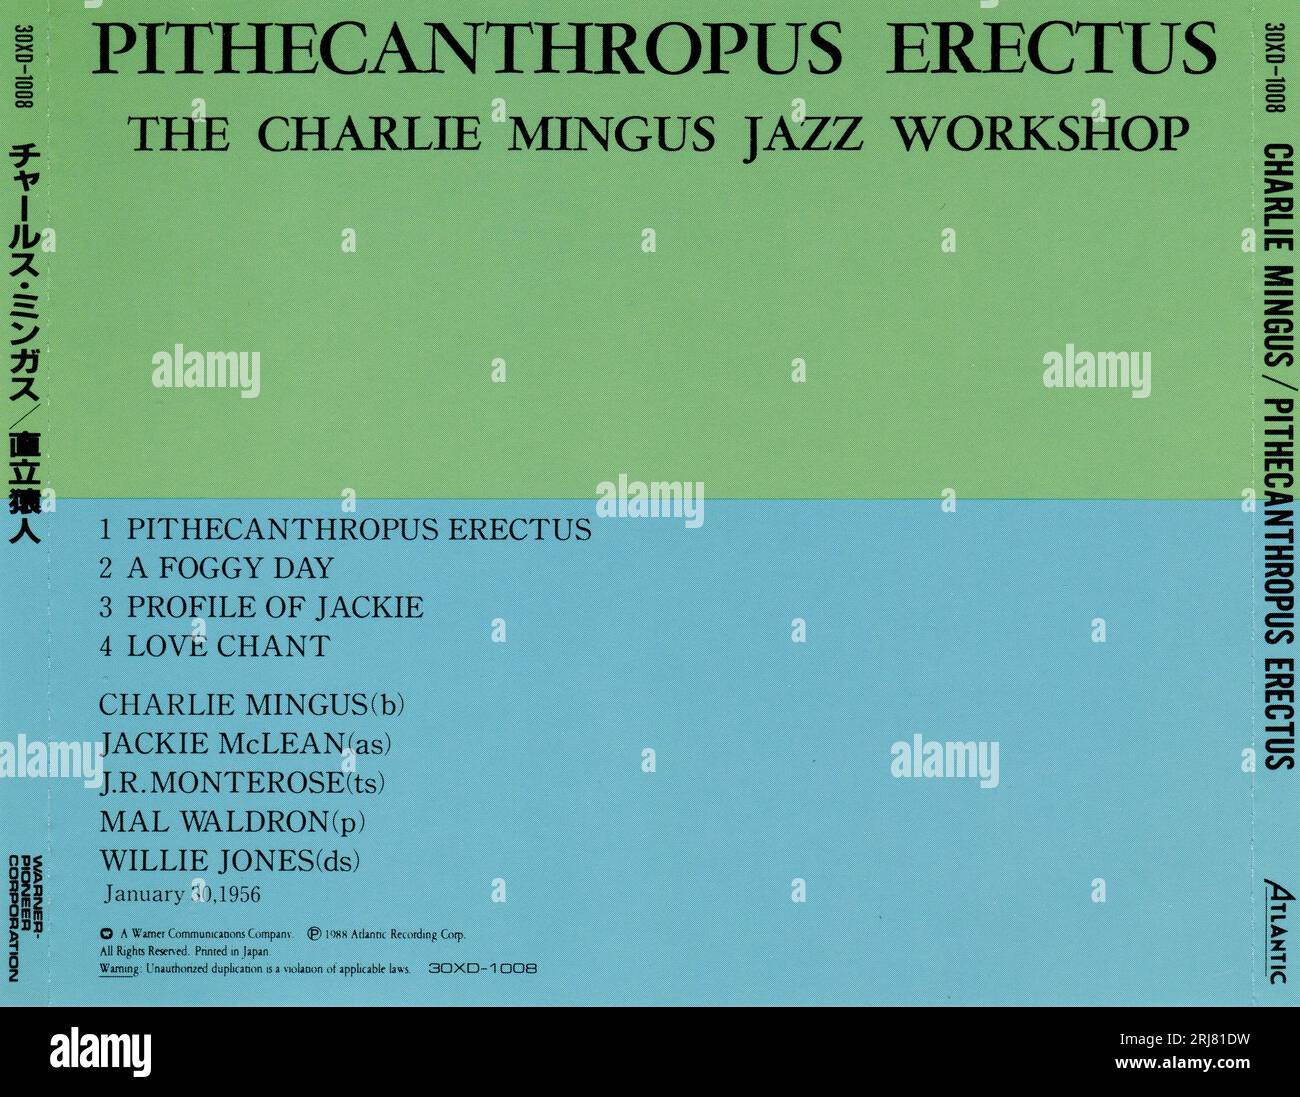 CD: Charles Mingus – Pithecanthropus Erectus. (30XD-1008), Released: November 28, 1988. Stock Photo